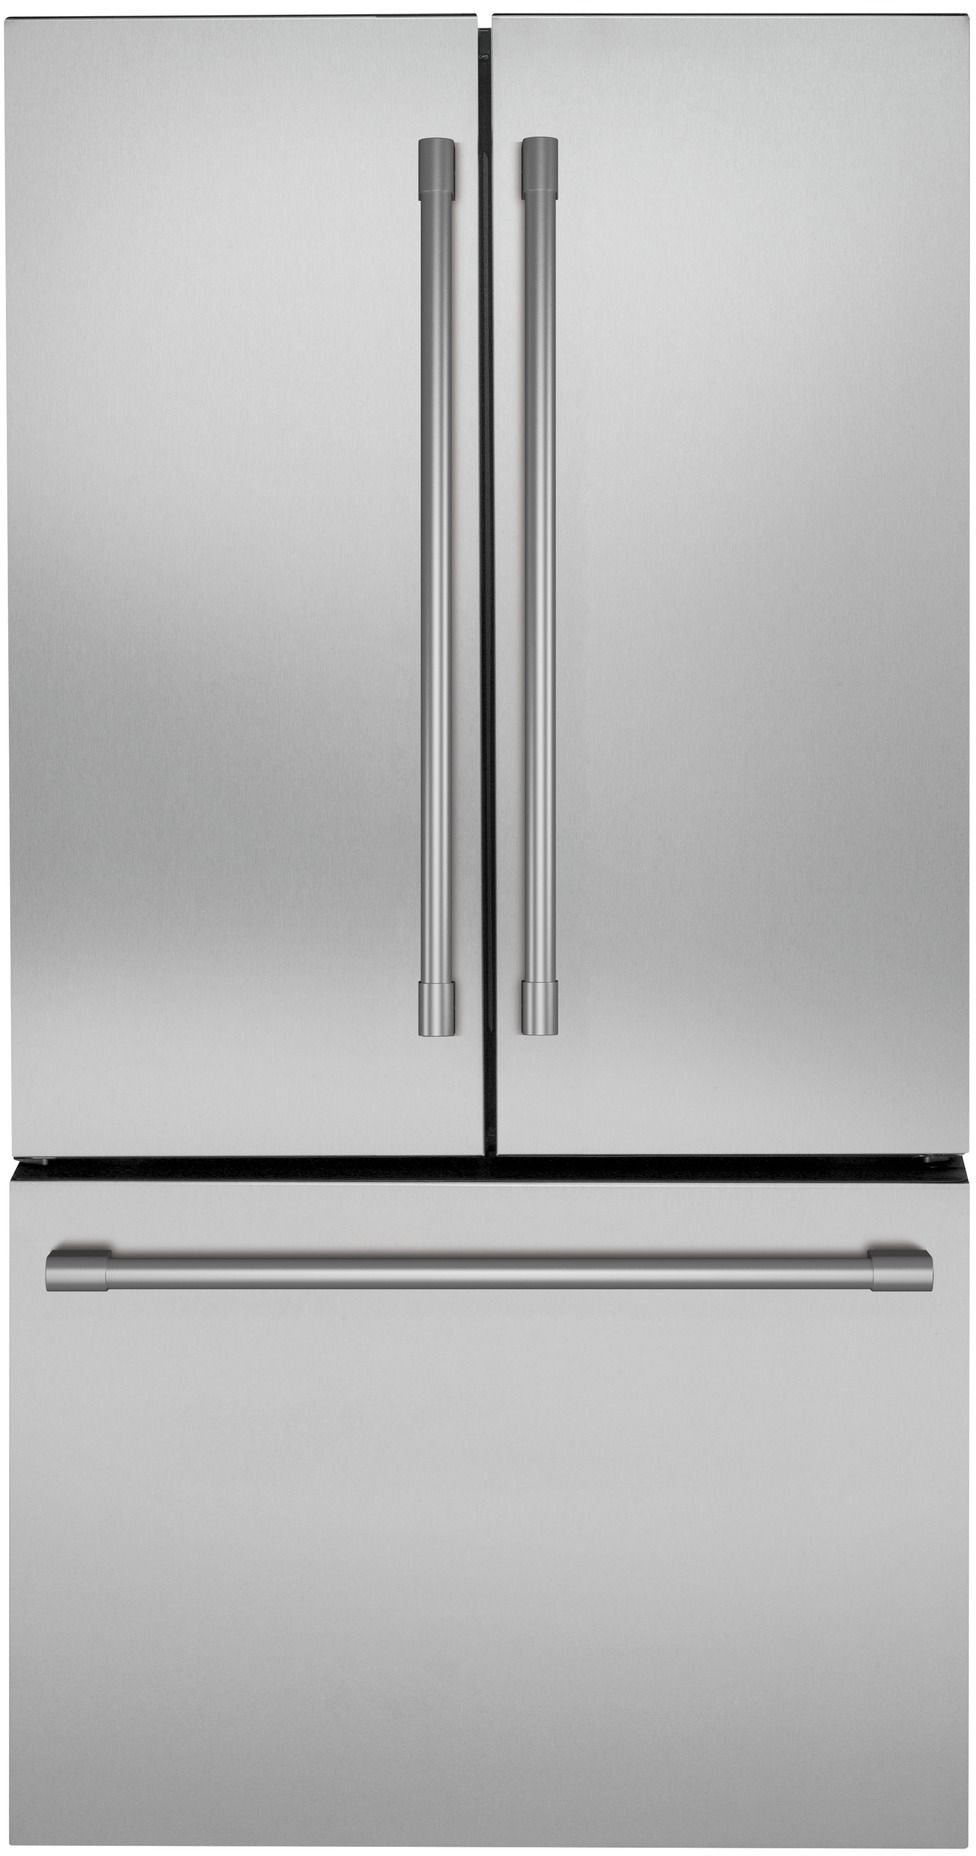 Monogram Statement 23.1 Cu. Ft. Stainless Steel Counter Depth French Door Refrigerator-ZWE23PSNSS